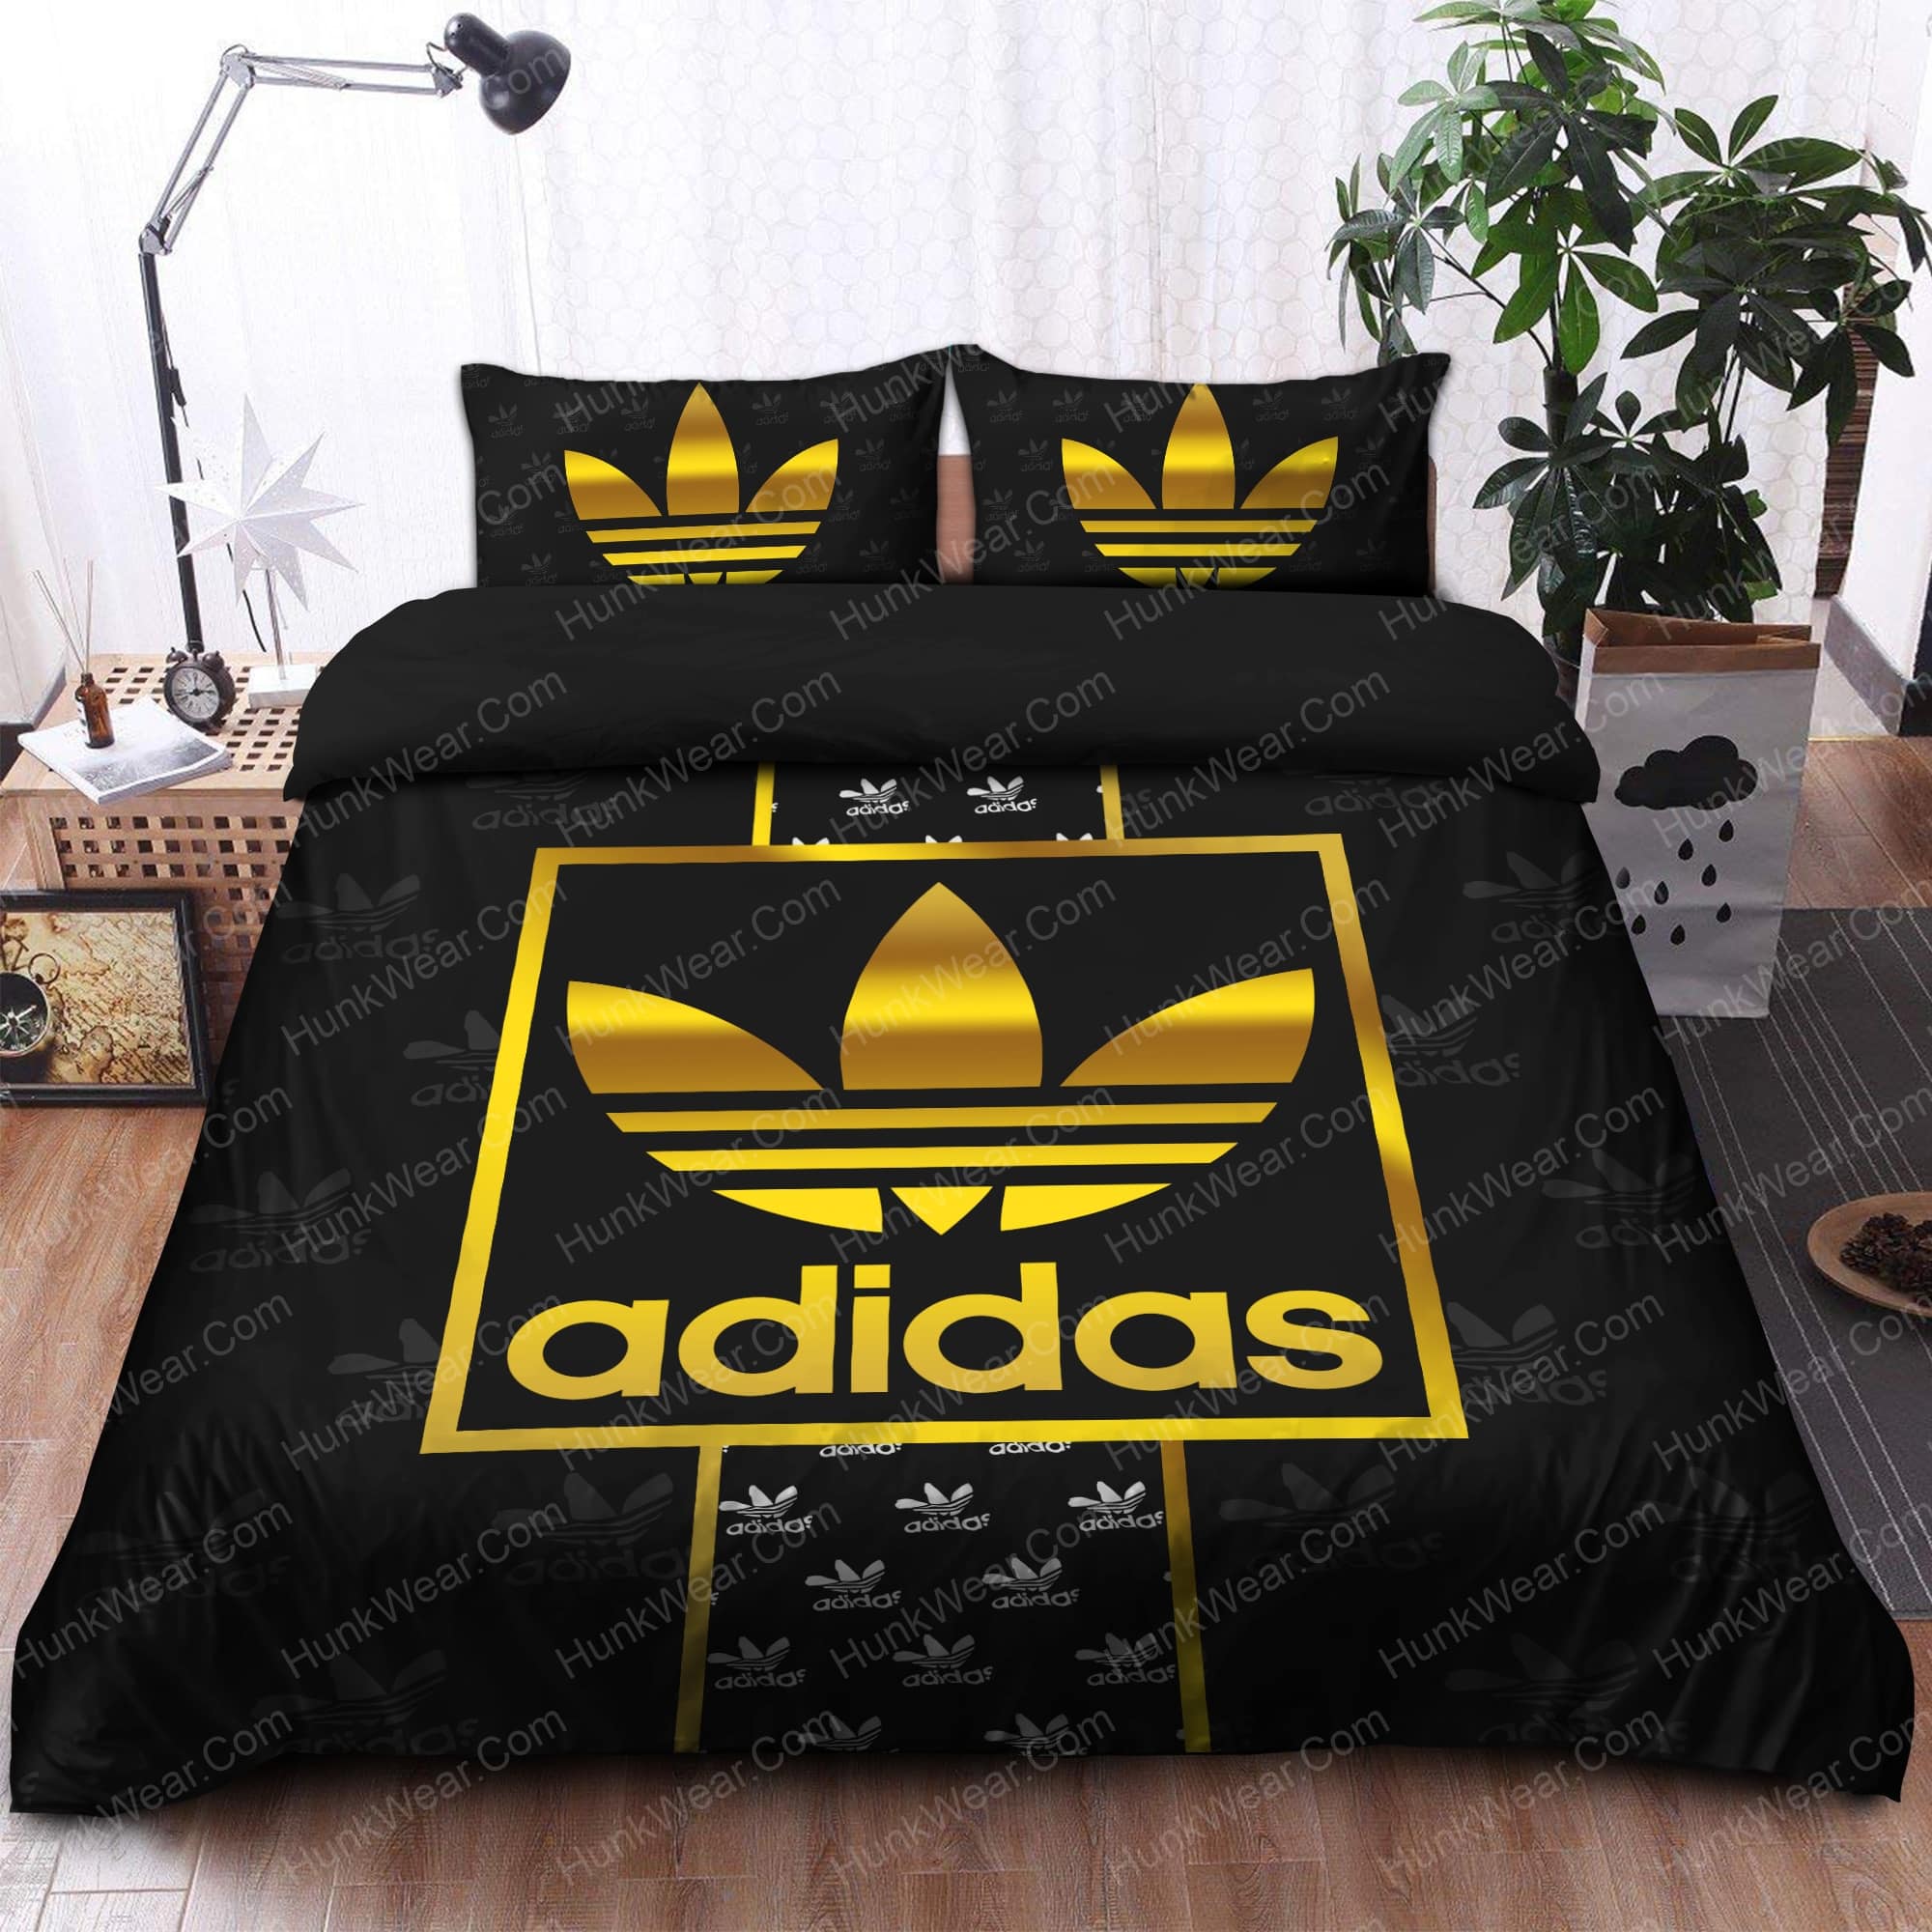 adidas gold logo bedding sets 5